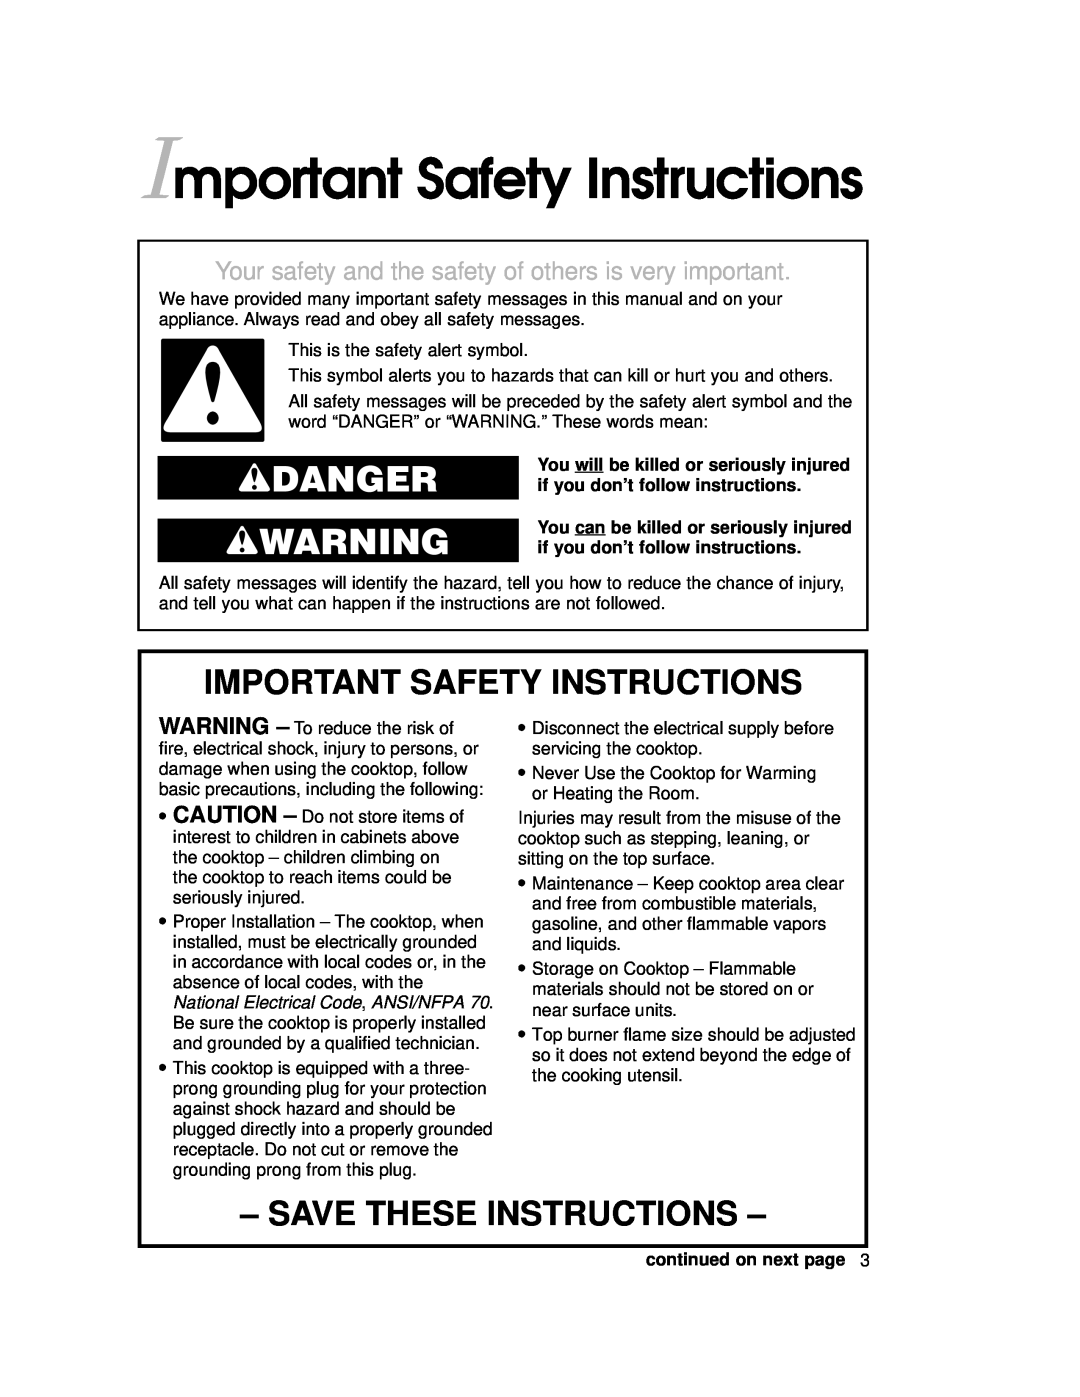 KitchenAid KGCT025, KSVD060B, KKECT025, KECG020 Important Safety Instructions, wDANGER wWARNING, Save These Instructions 